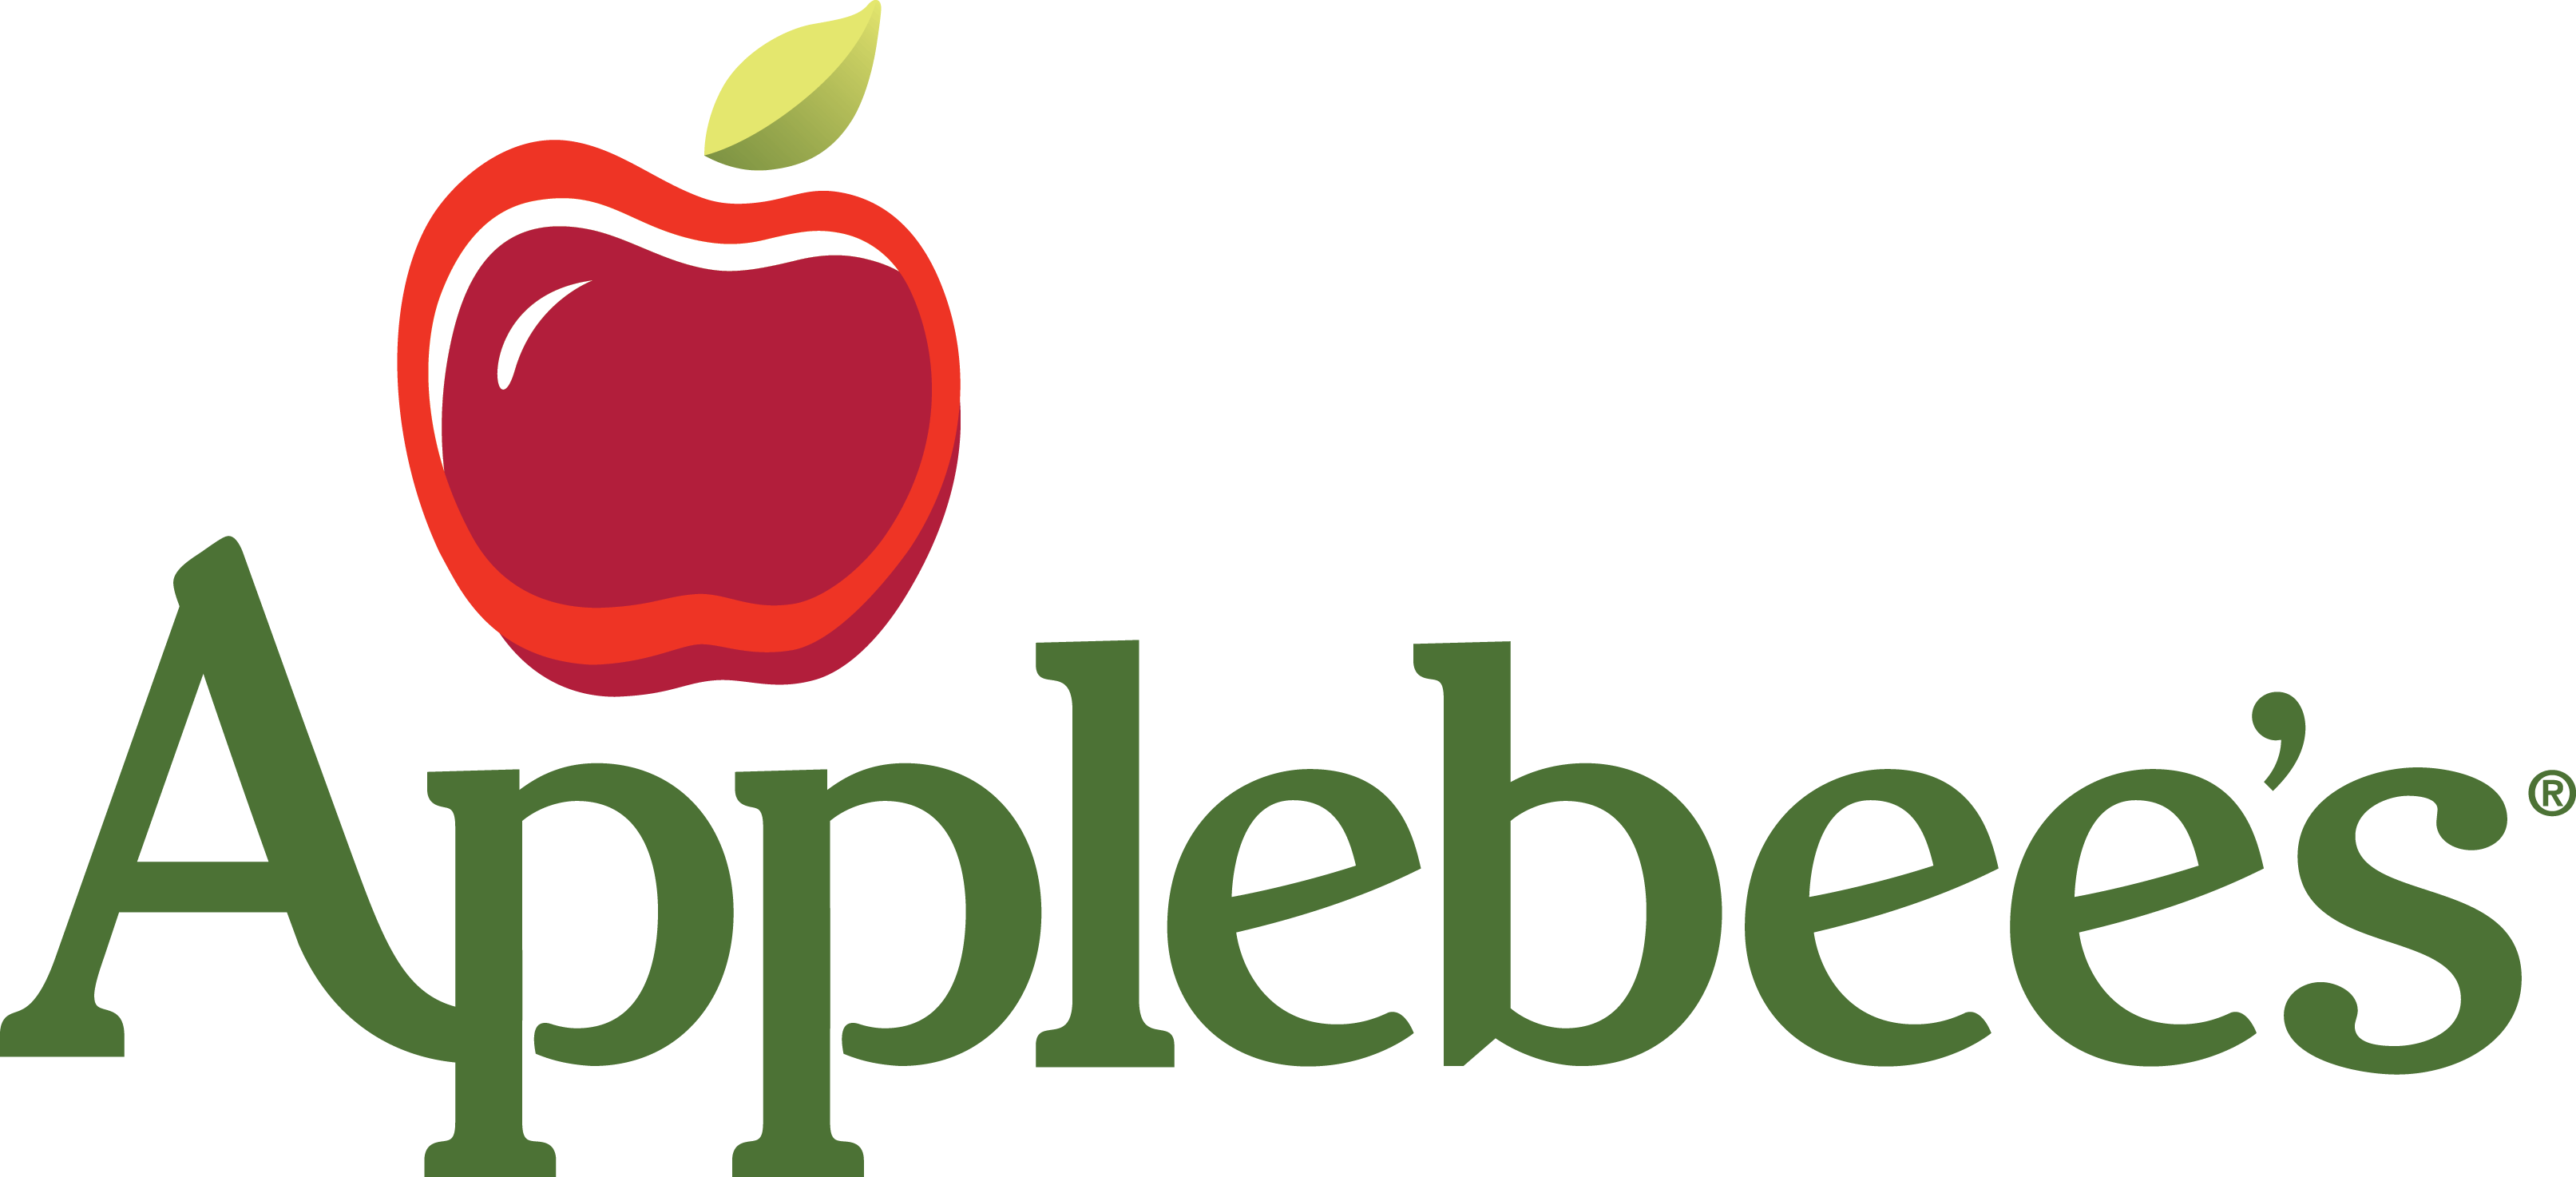 Applebee's 2013 Logo - Applebee's waitress fired for posting customer complaint Daily